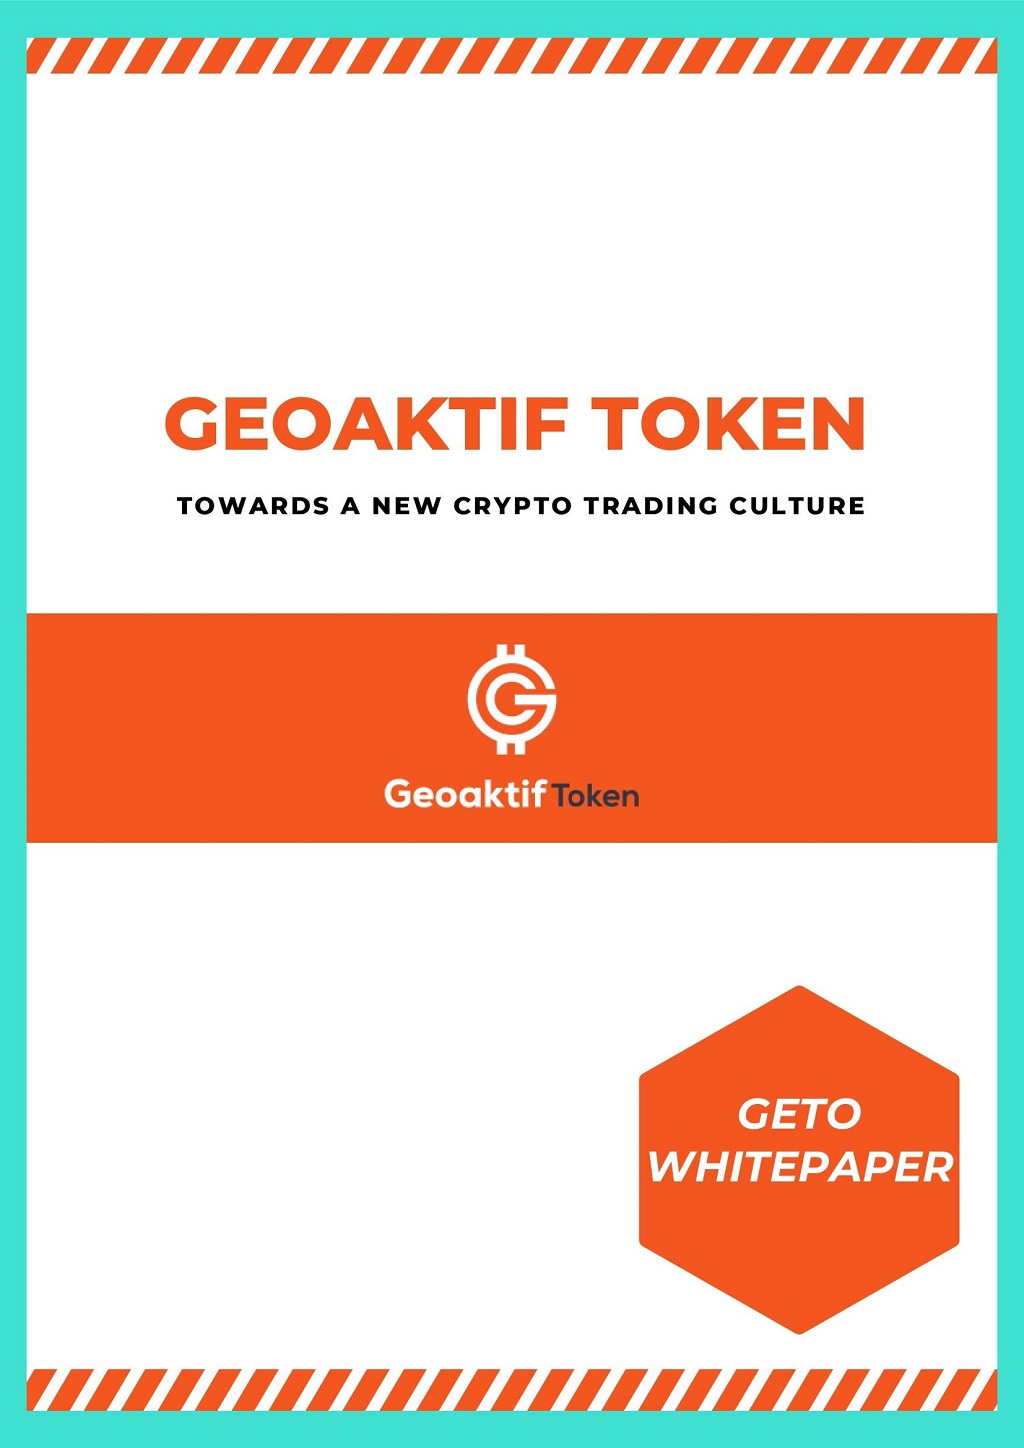 Whitepaper of Geoaktif Token